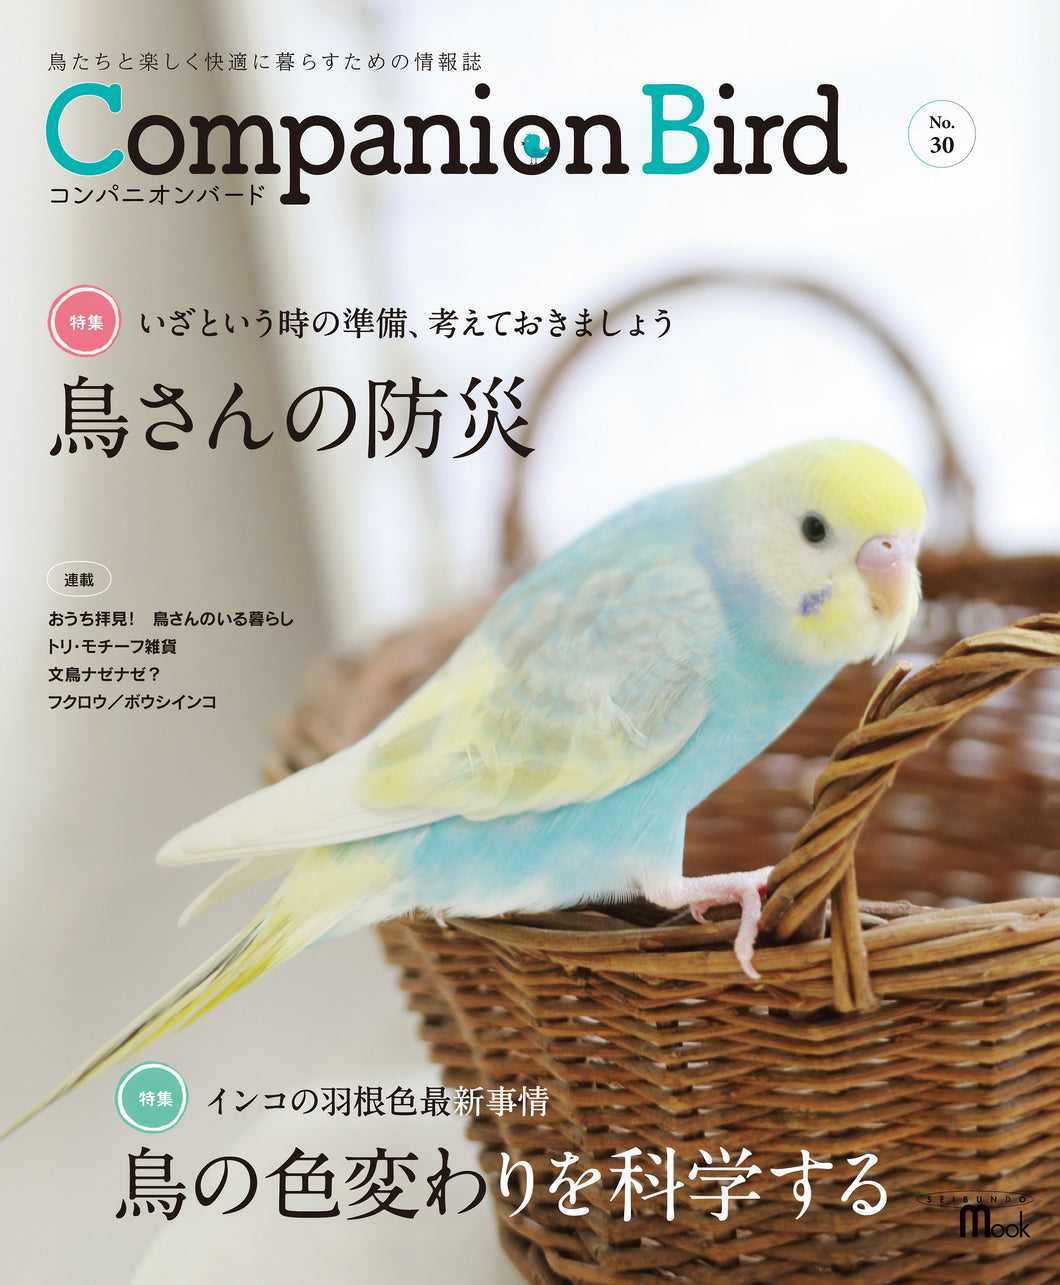 Companion Bird No.30 Mr. Bird's Disaster Prevention